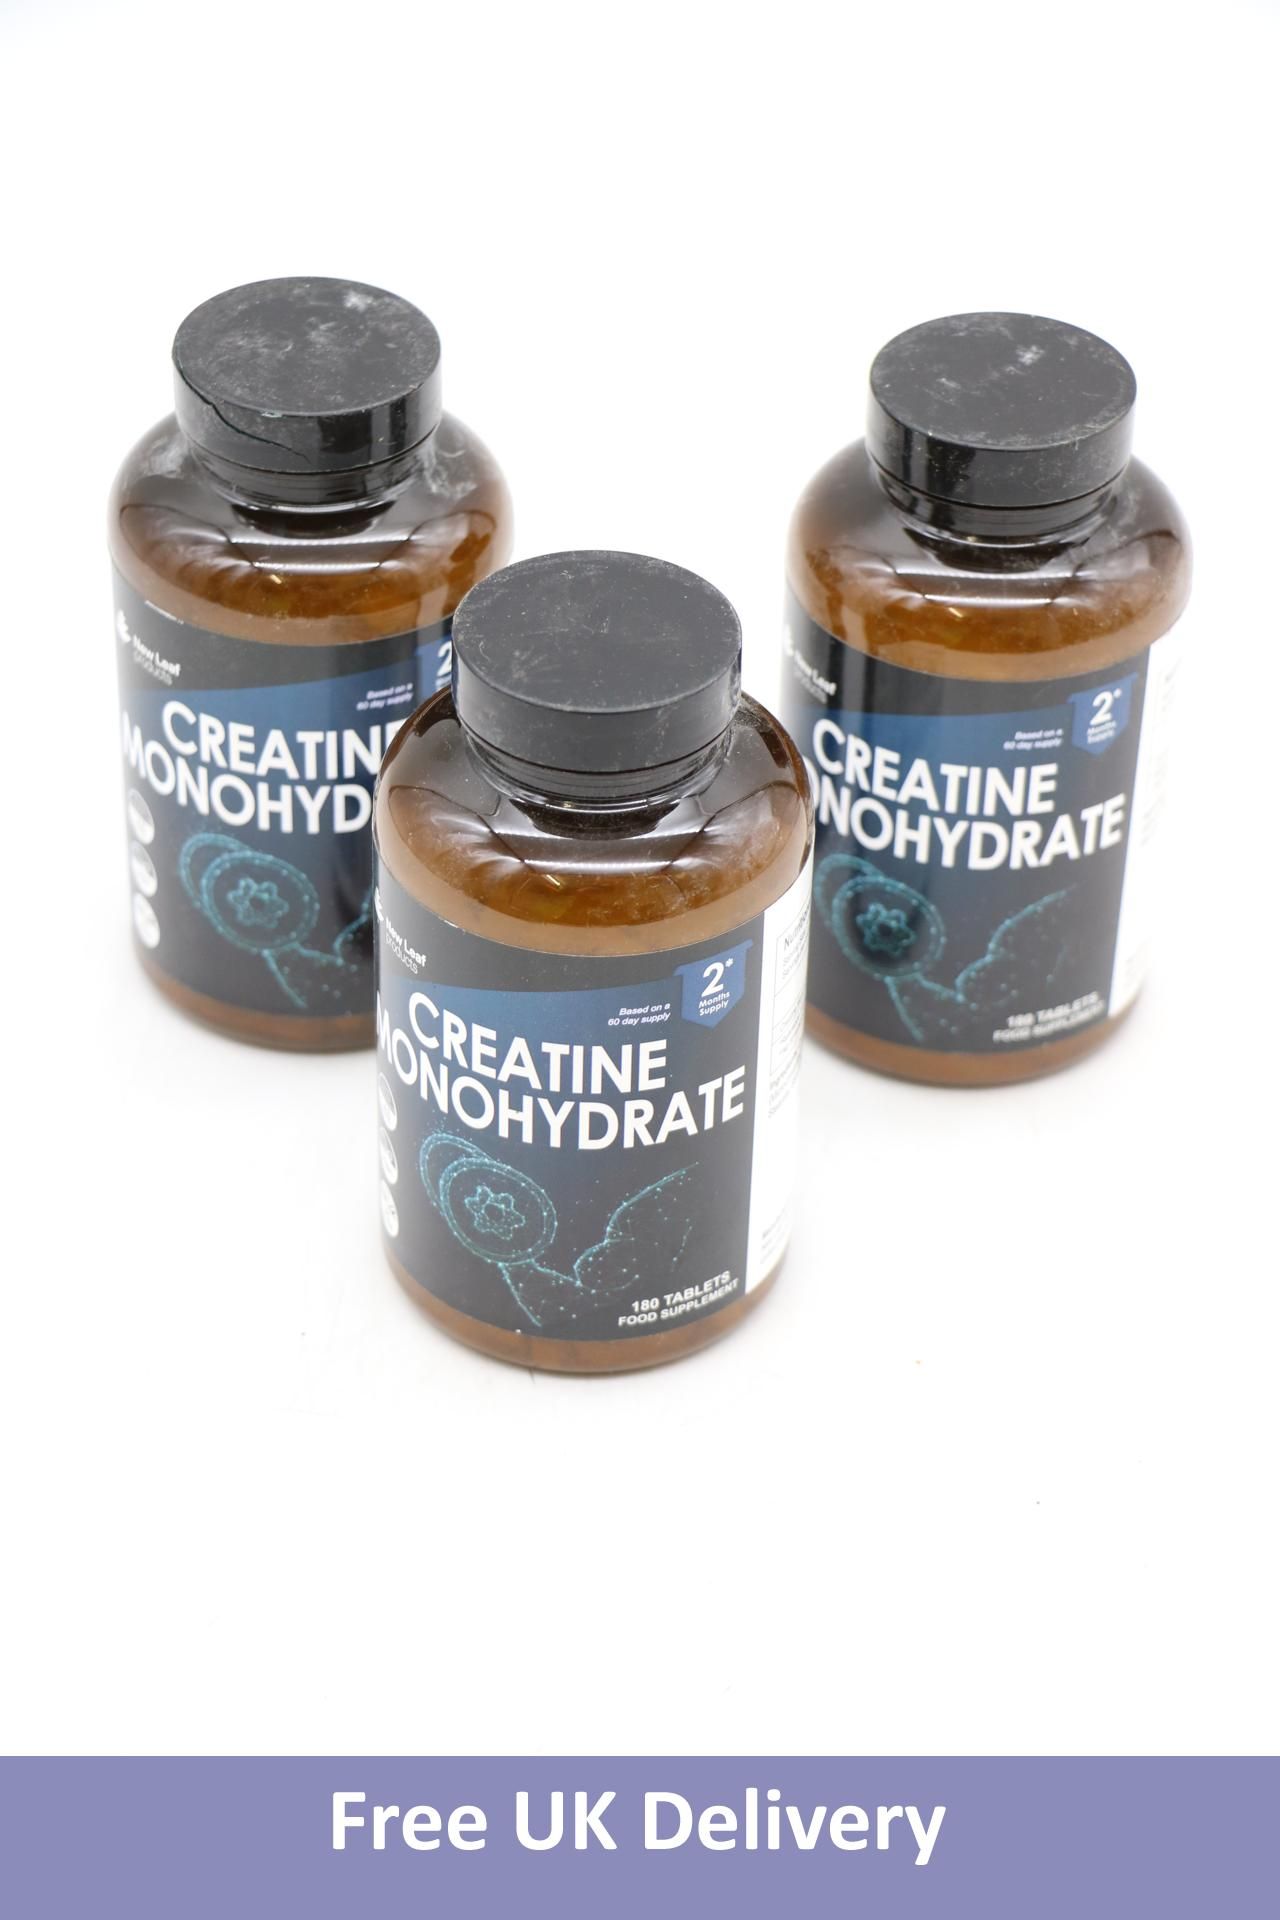 Three bottles of Creatine Monohydrate, 180 Tablets